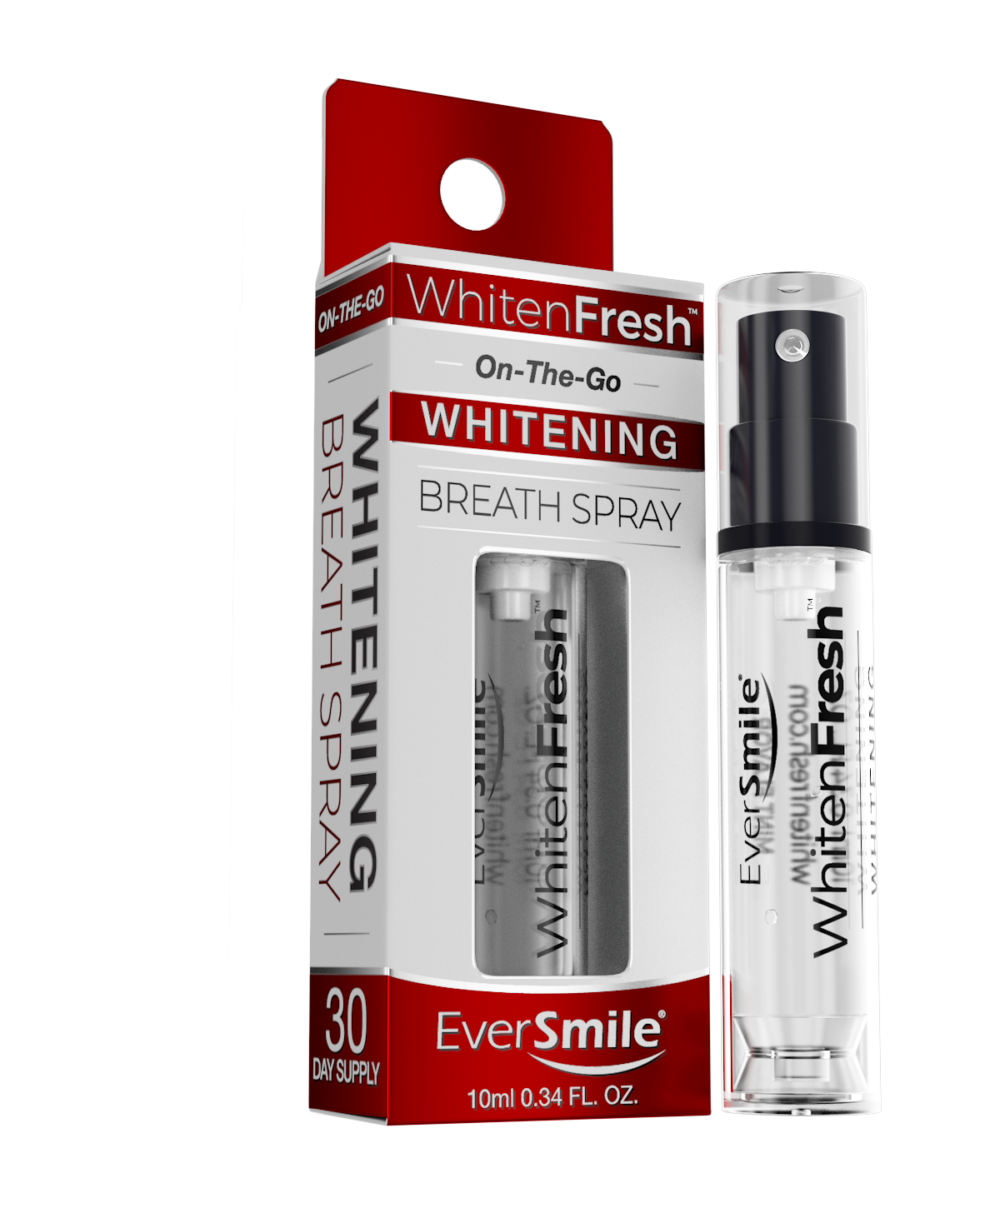 EverSmile's WhitenFresh On-the-go breath spray